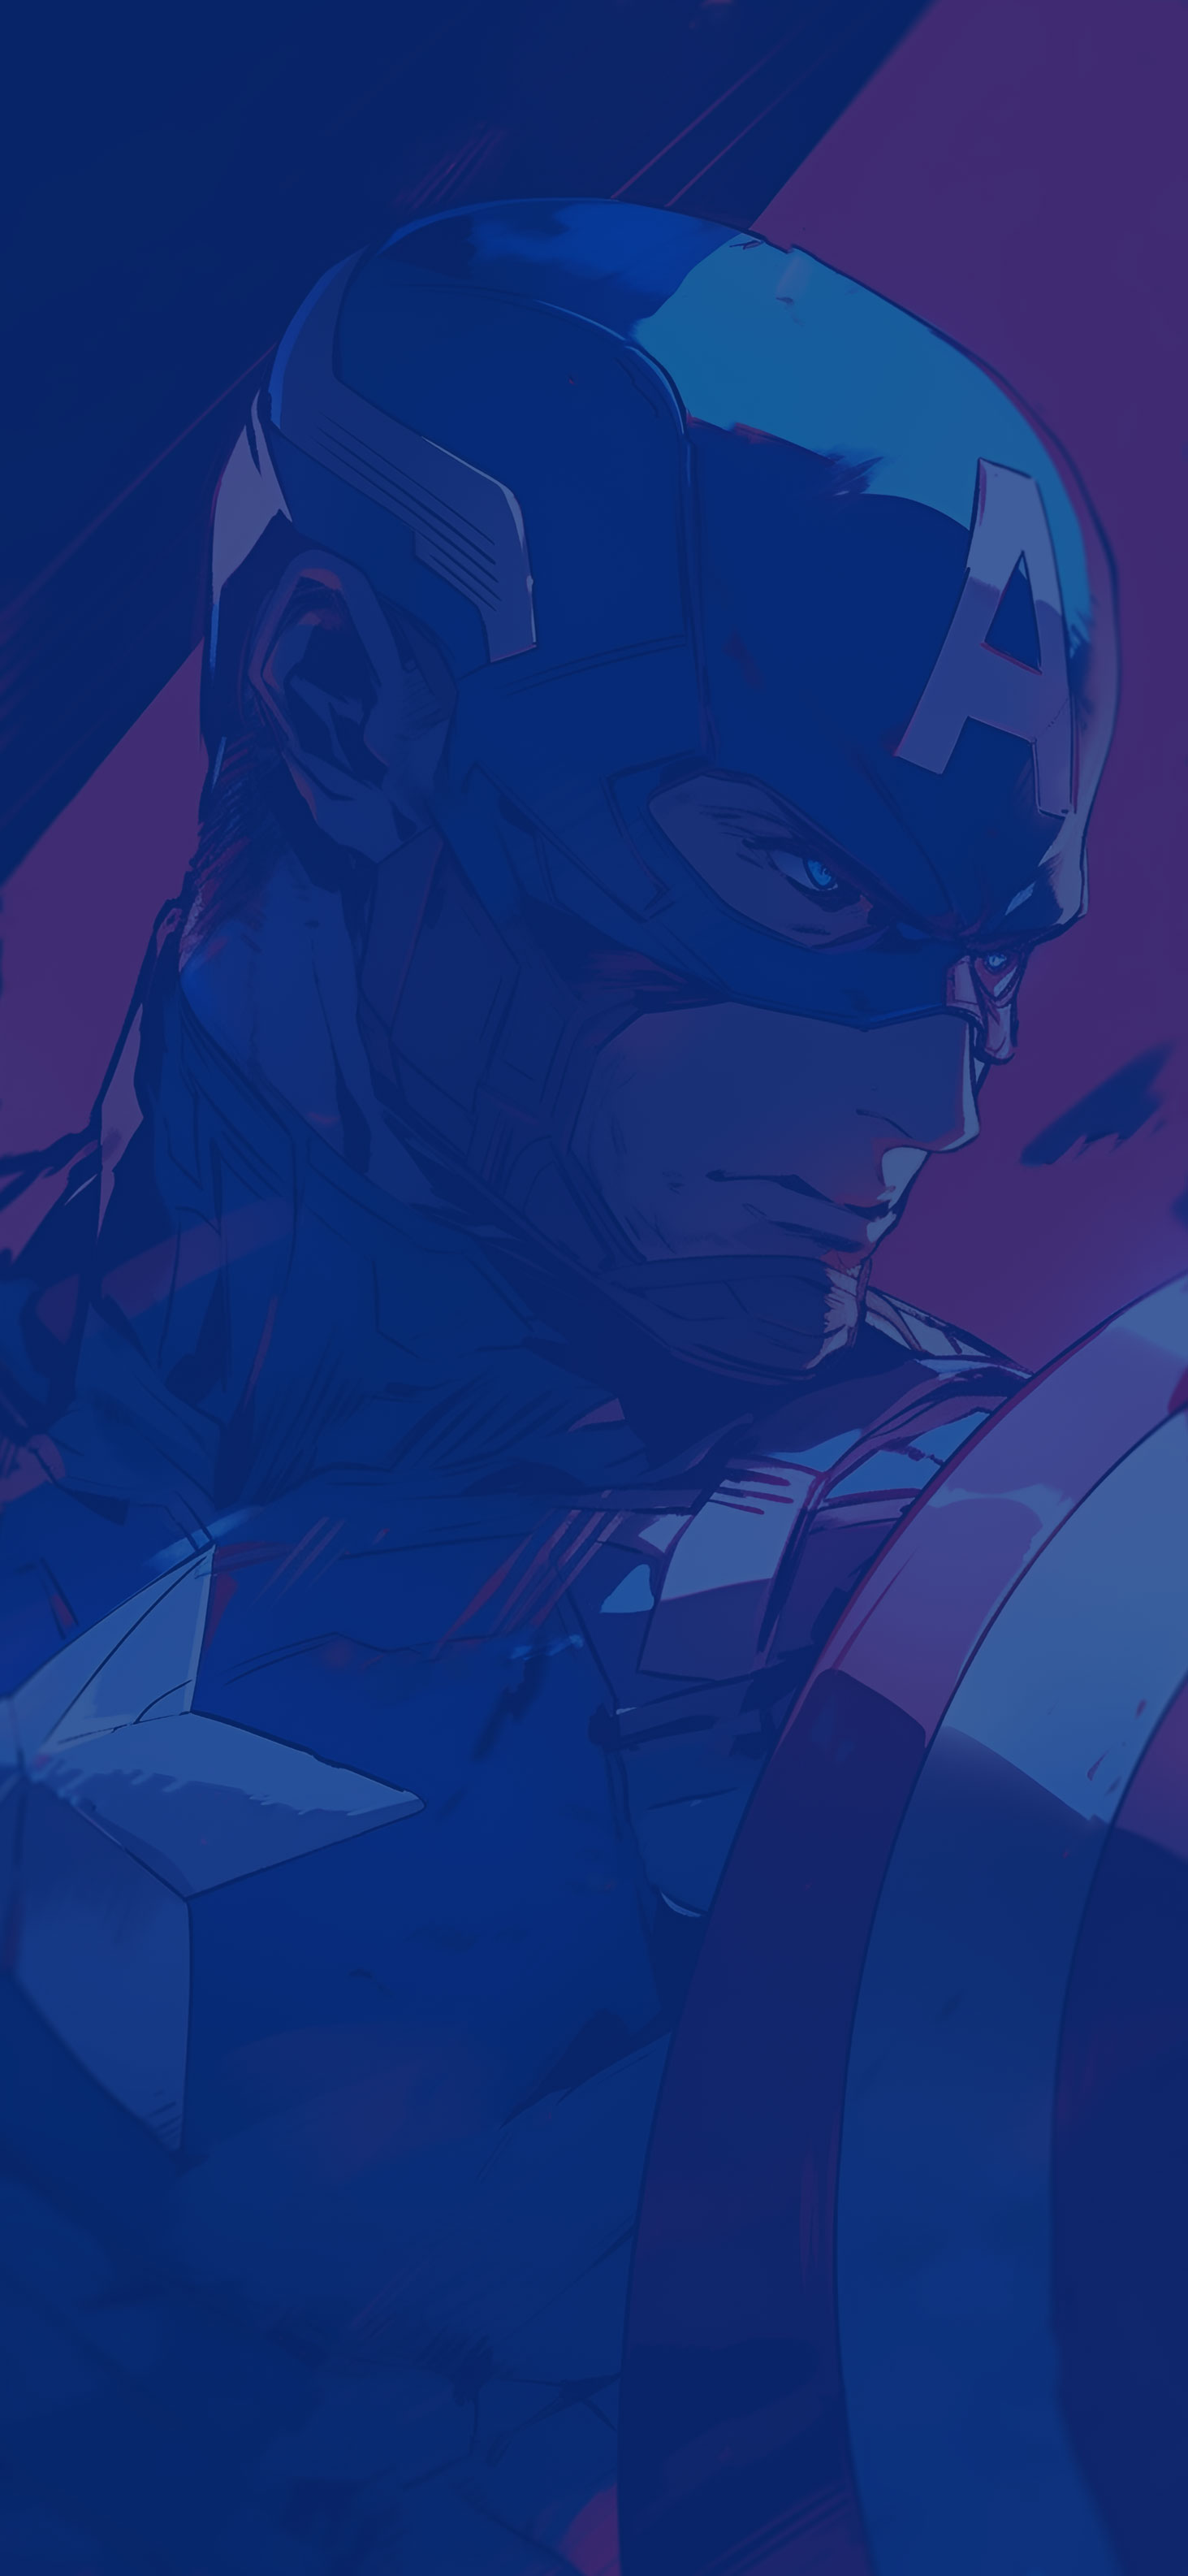 Imágenes y fondos de Avengers  Imagenes de capitan america, Capitán américa,  Avengers